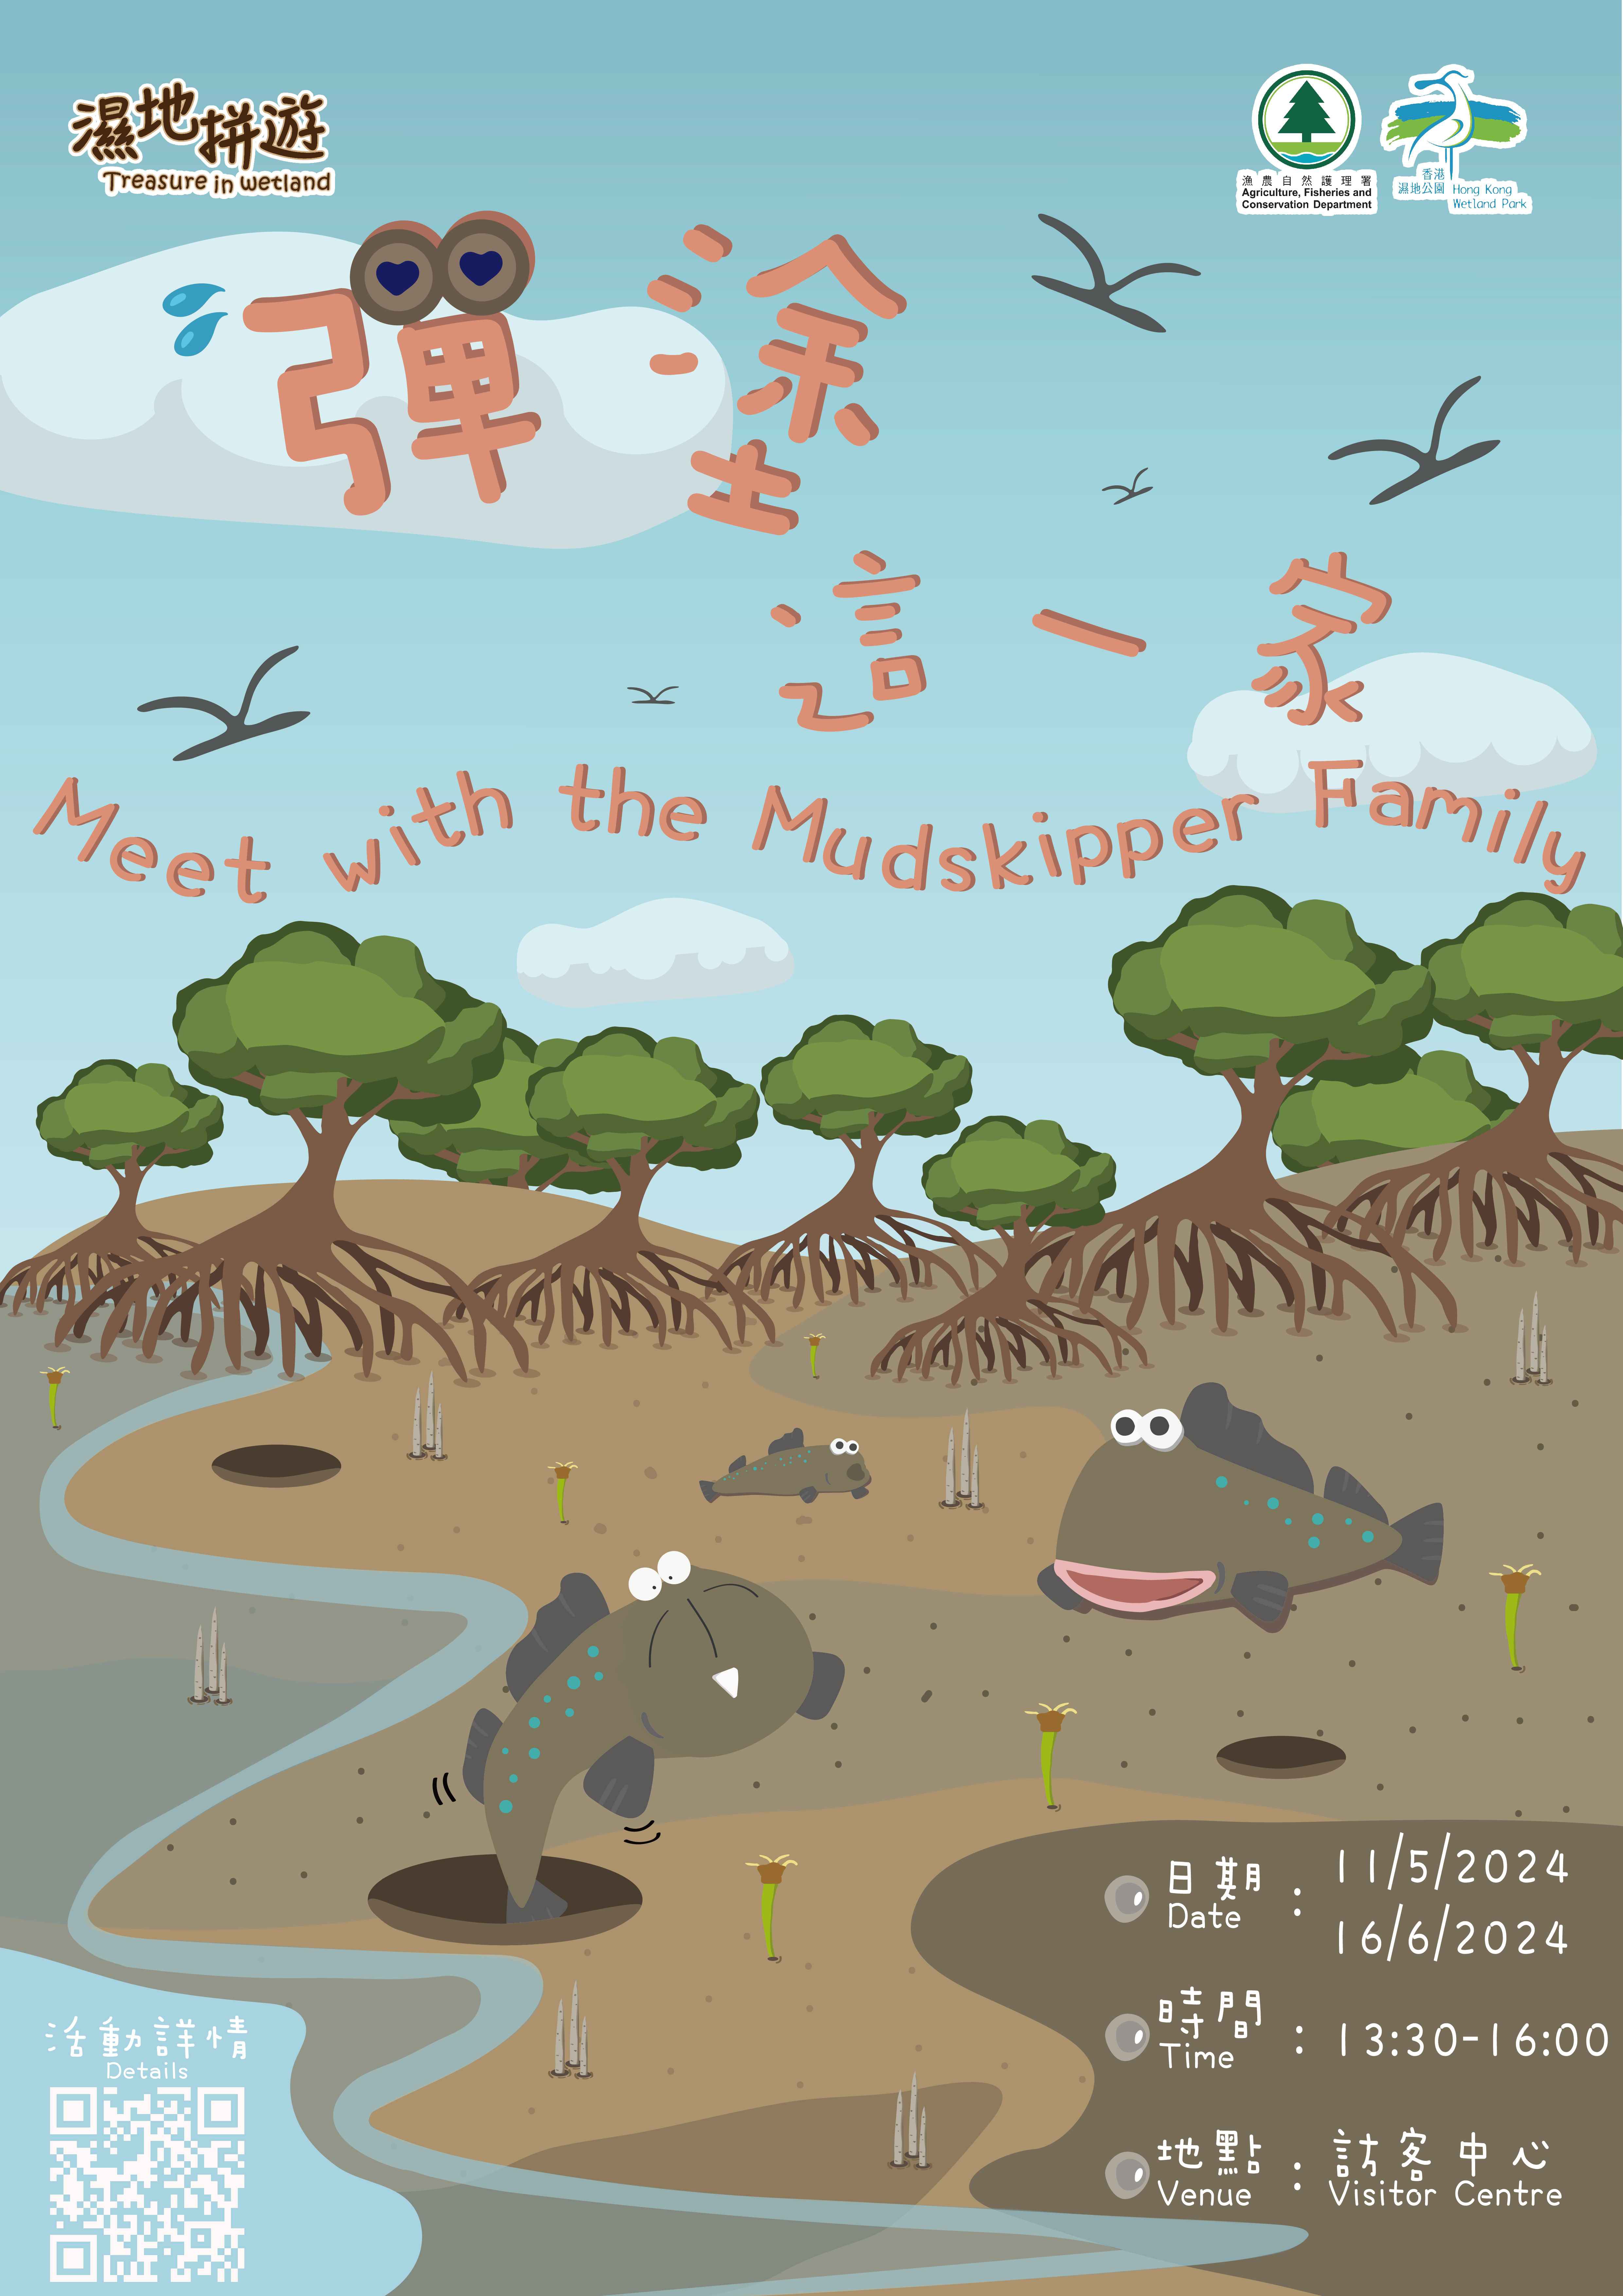 Treasure in Wetland – Meet with the Mudskipper Family